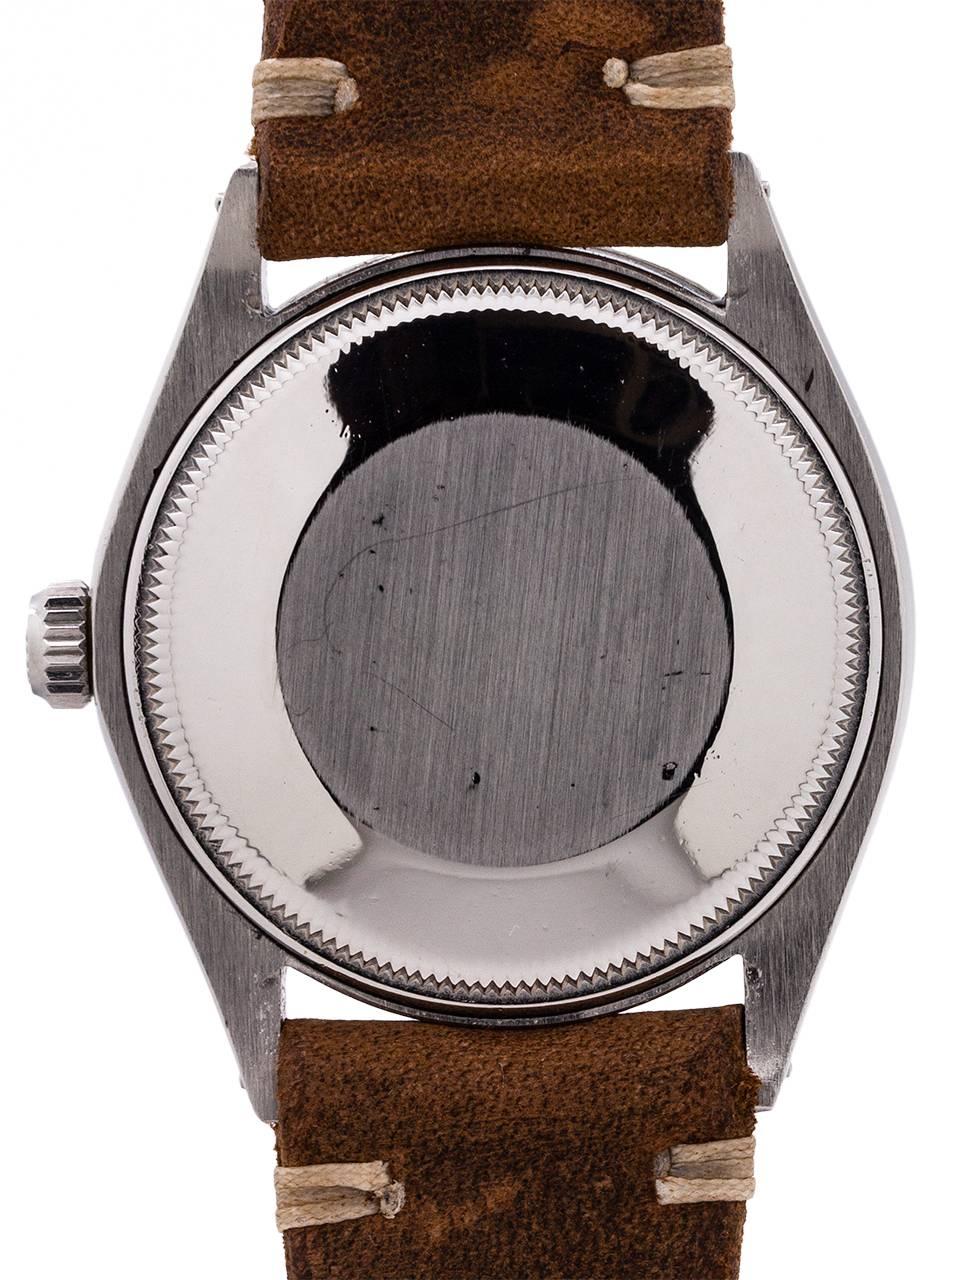 Men's Rolex Stainless Steel Airking Super Precision self winding Watch Ref 1005, c1971